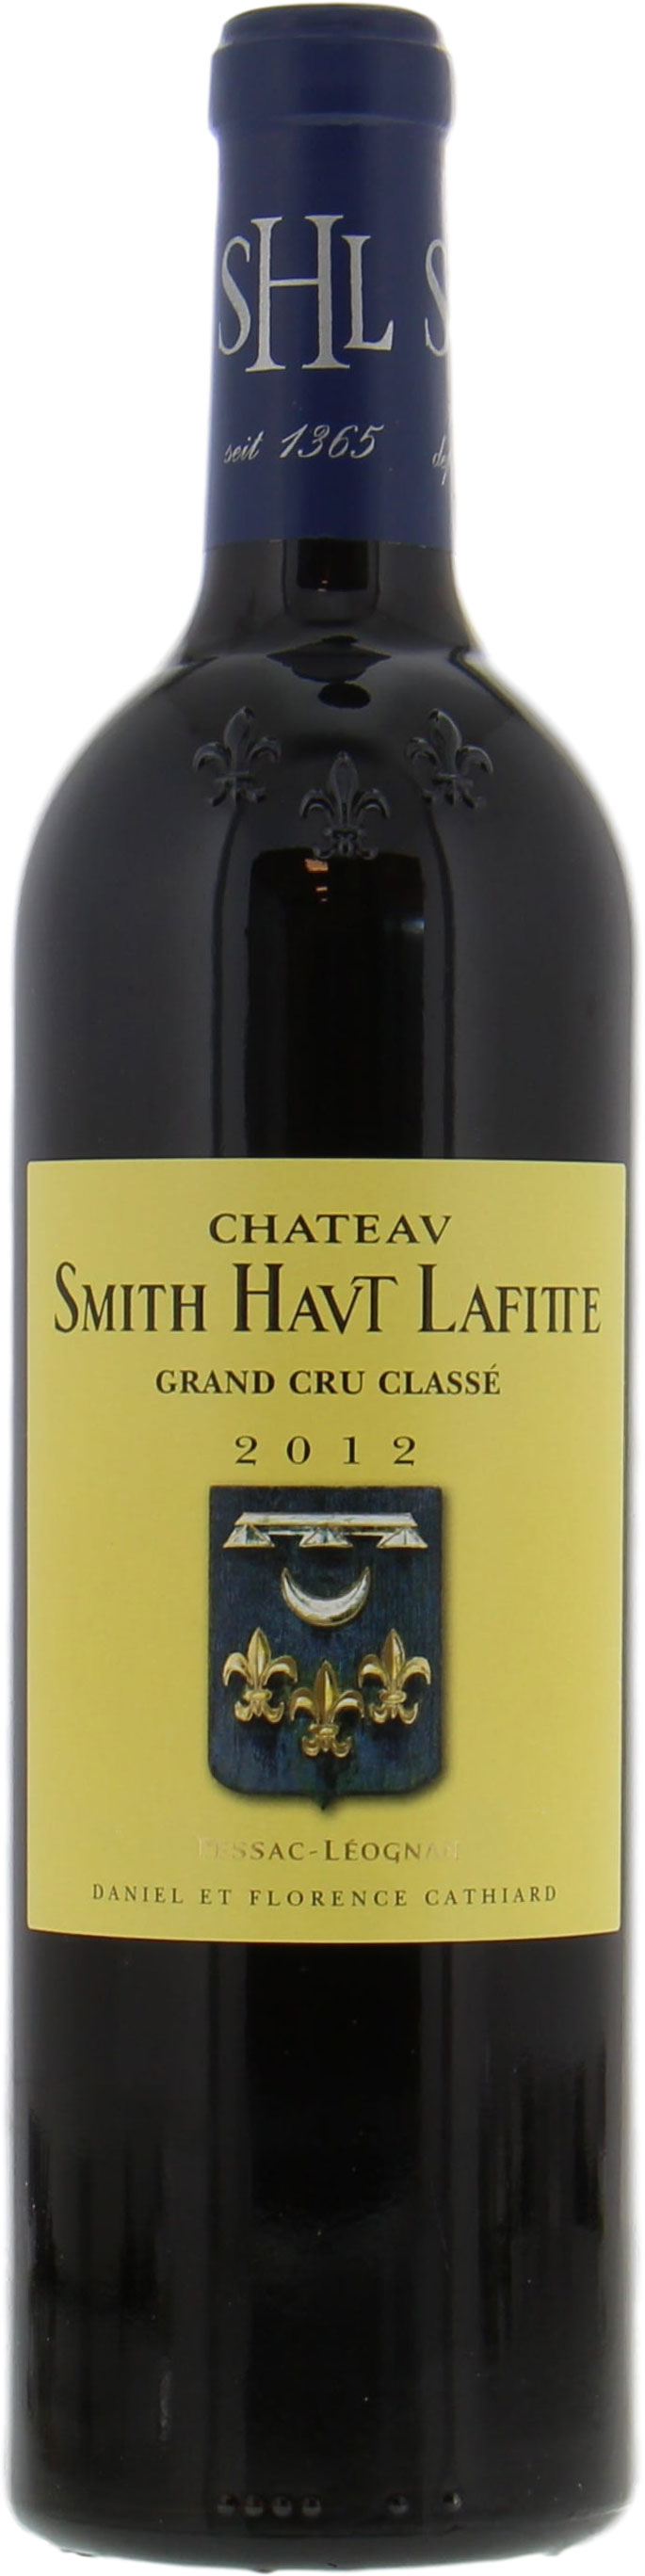 Chateau Smith-Haut-Lafitte Rouge - Chateau Smith-Haut-Lafitte Rouge 2012